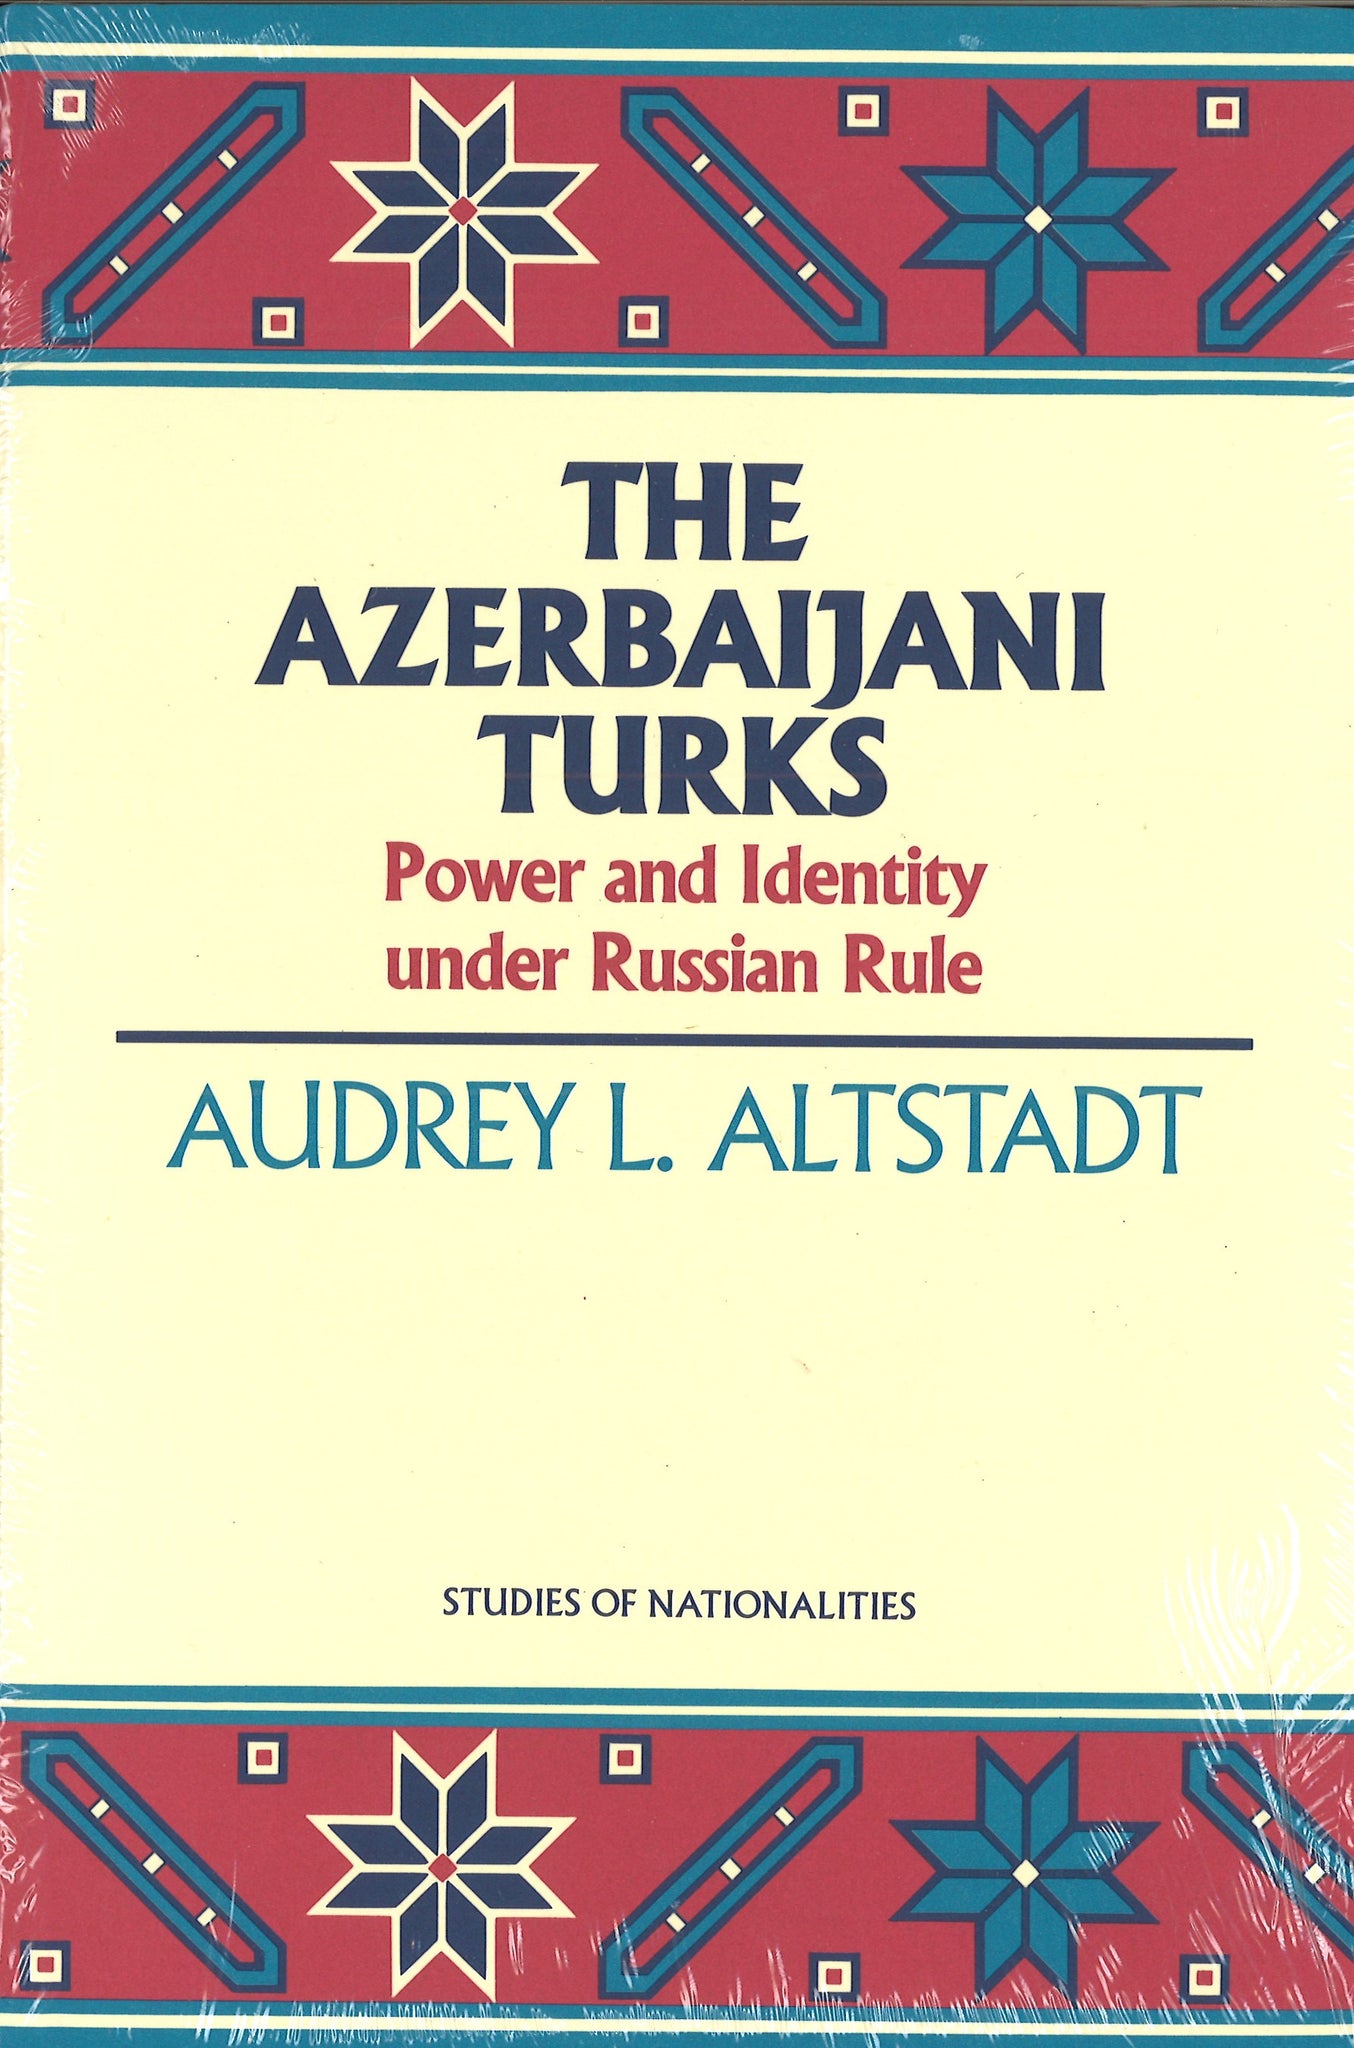 AZERBAIJANI TURKS, THE: POWER AND IDENTITY UNDER RUSSIAN RULE